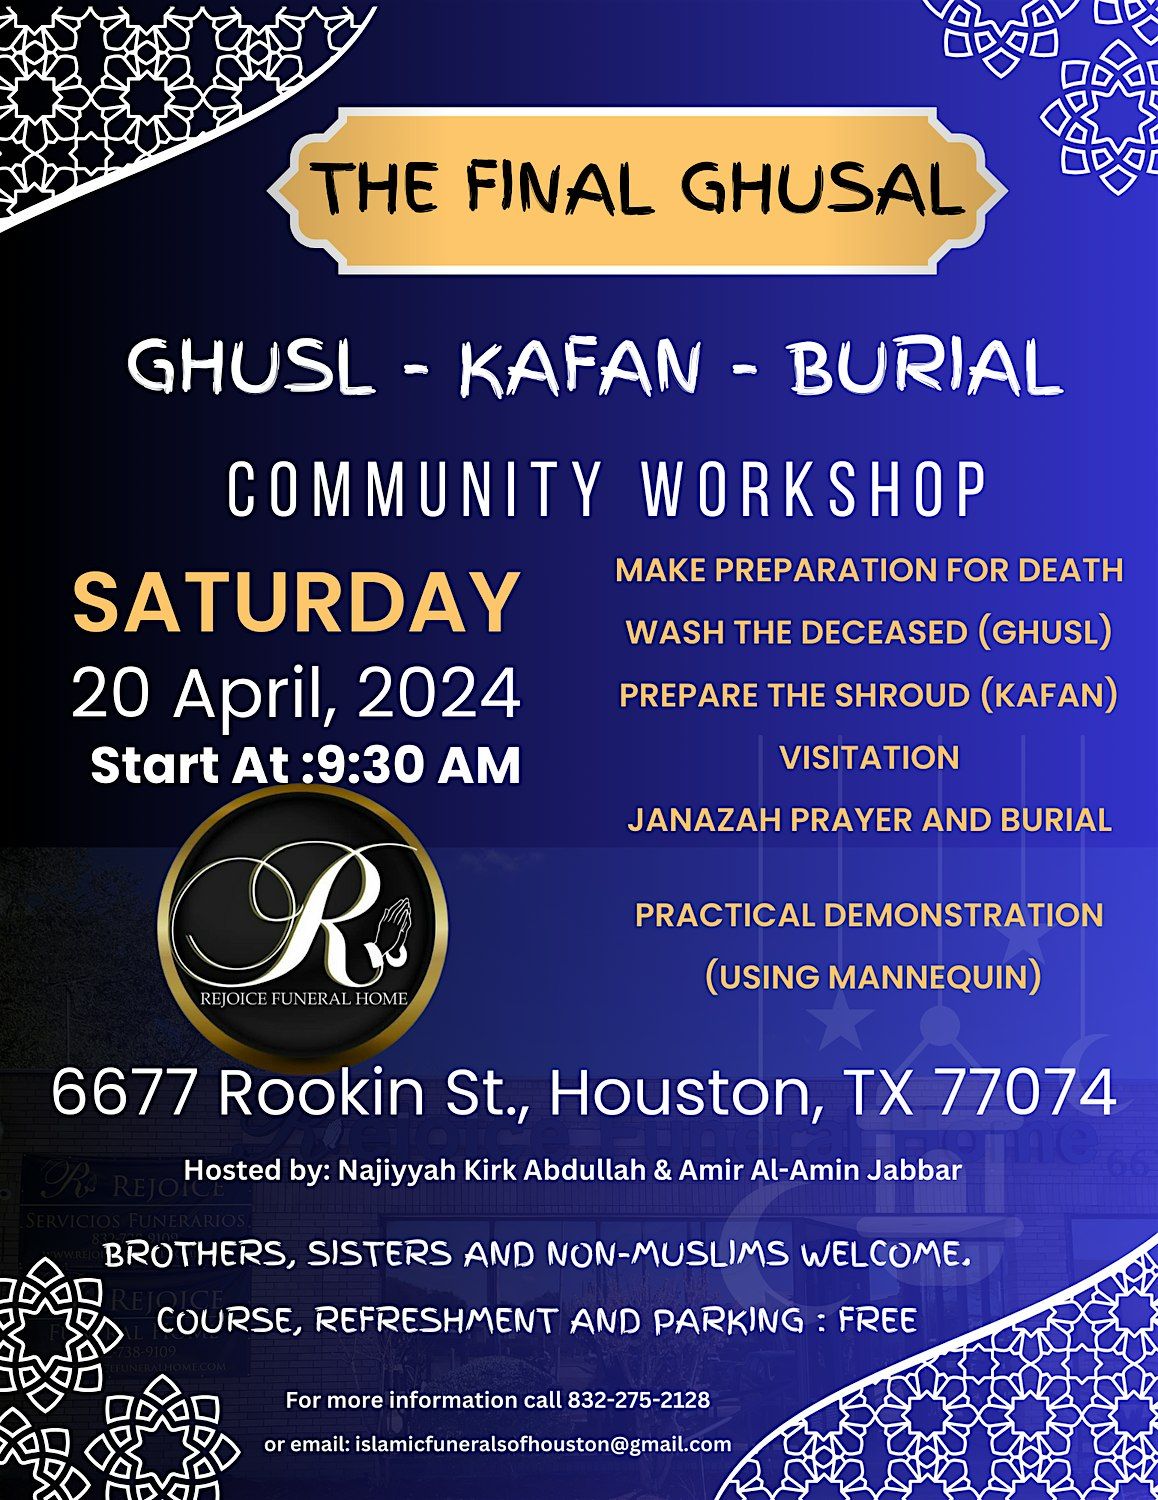 The Final Ghusl Community Workshop